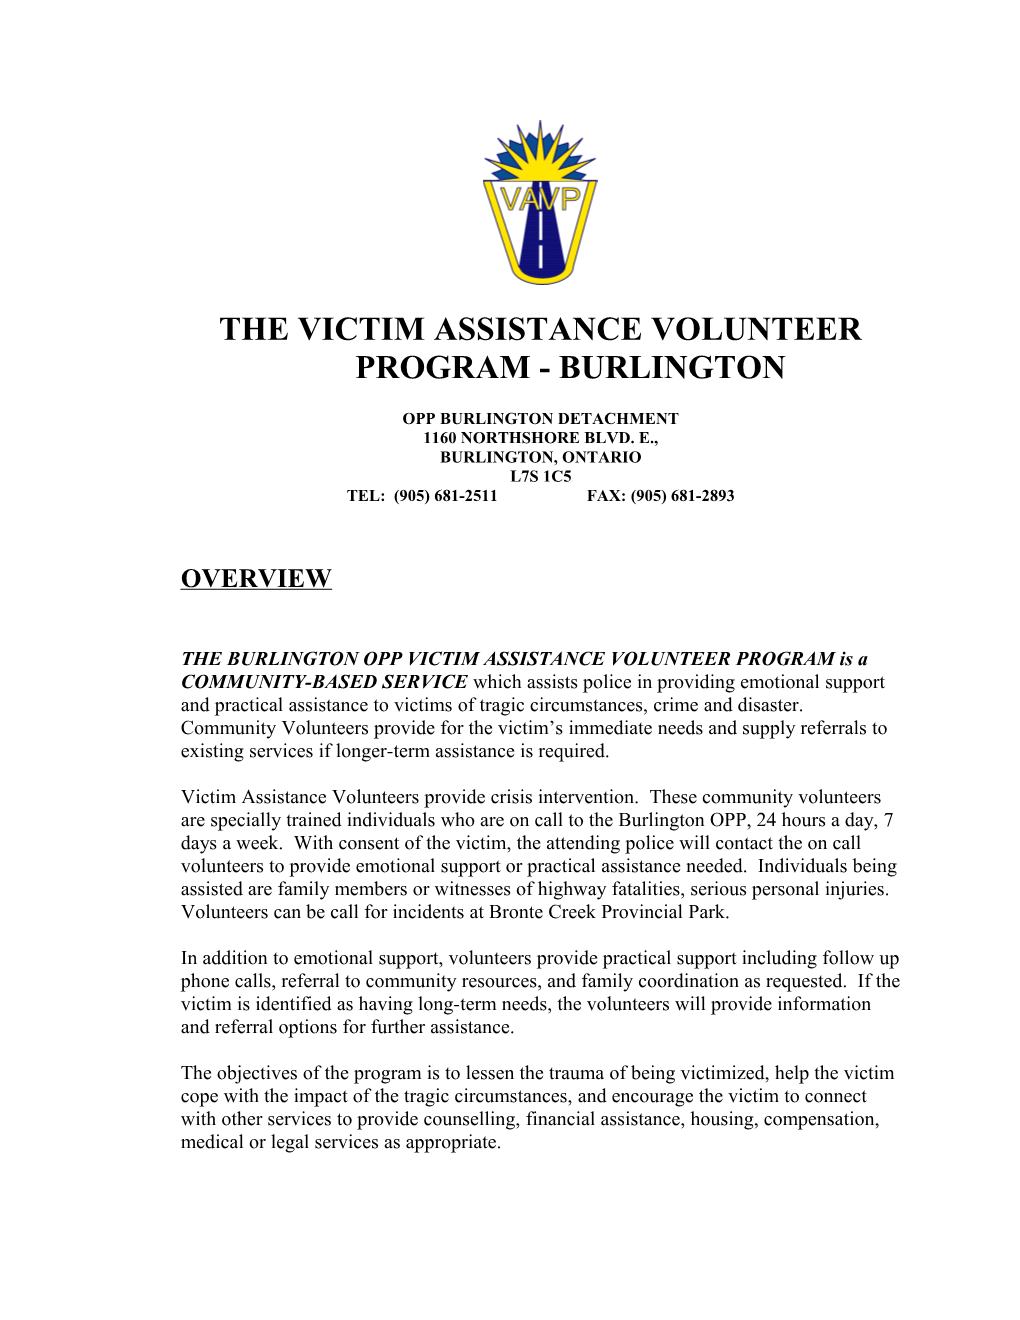 Victim Assistance Volunteer Program (Burlington)